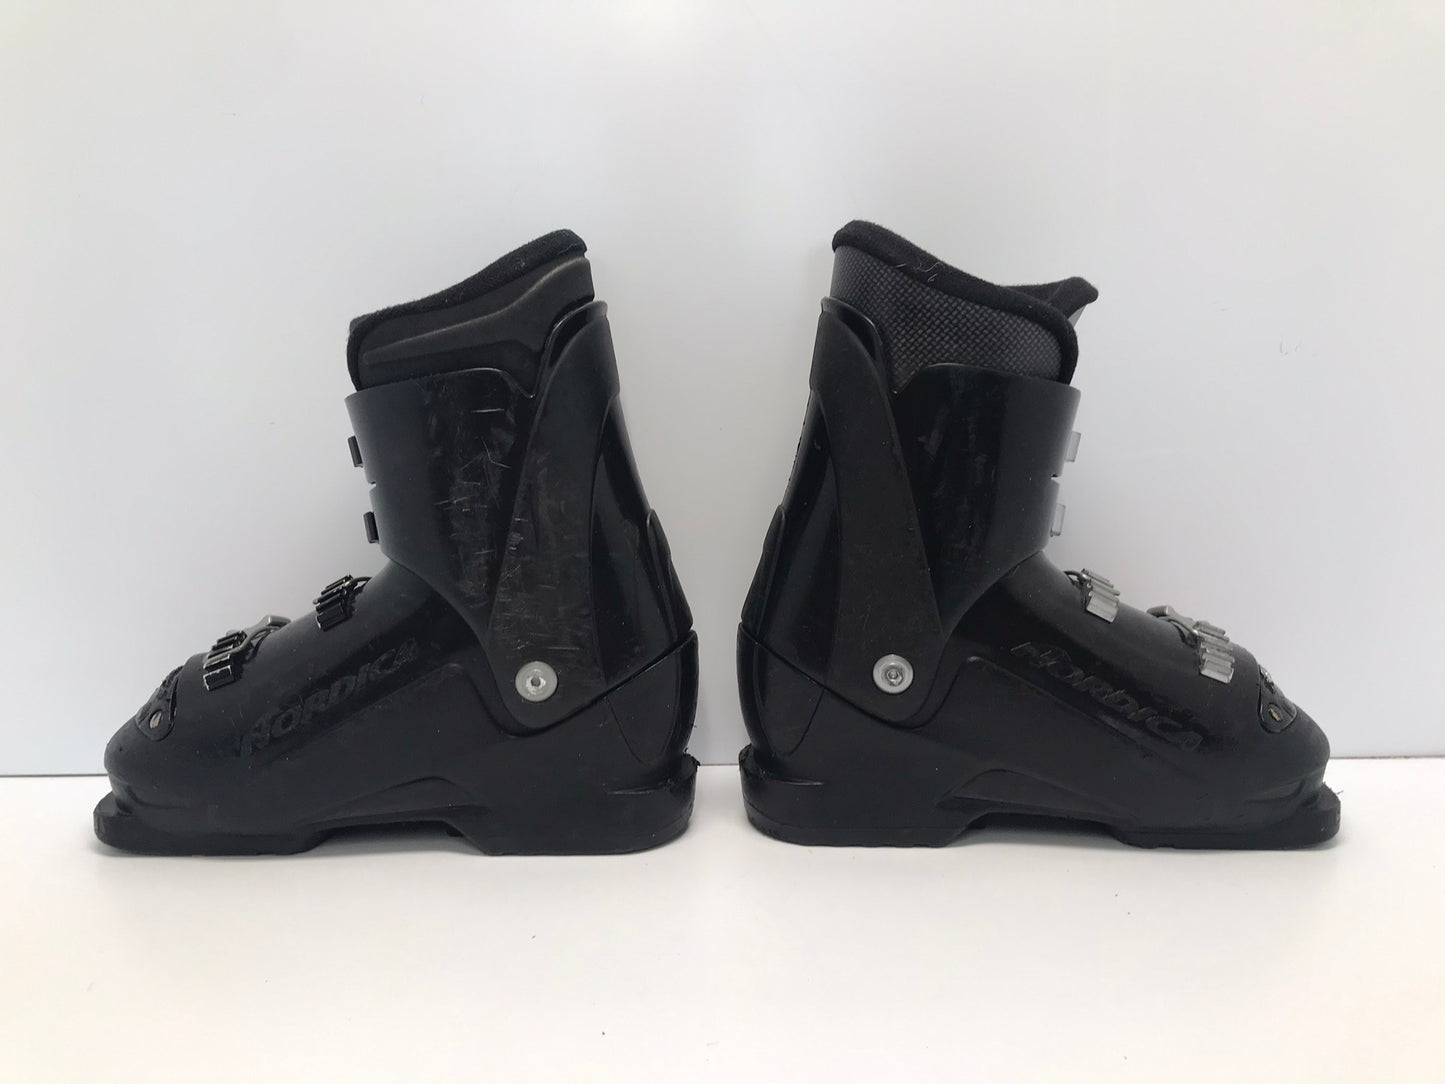 Ski Boots Mondo Size 23.0 Child Size 4-5 270 mm Black Red Minor Wear New Buckles